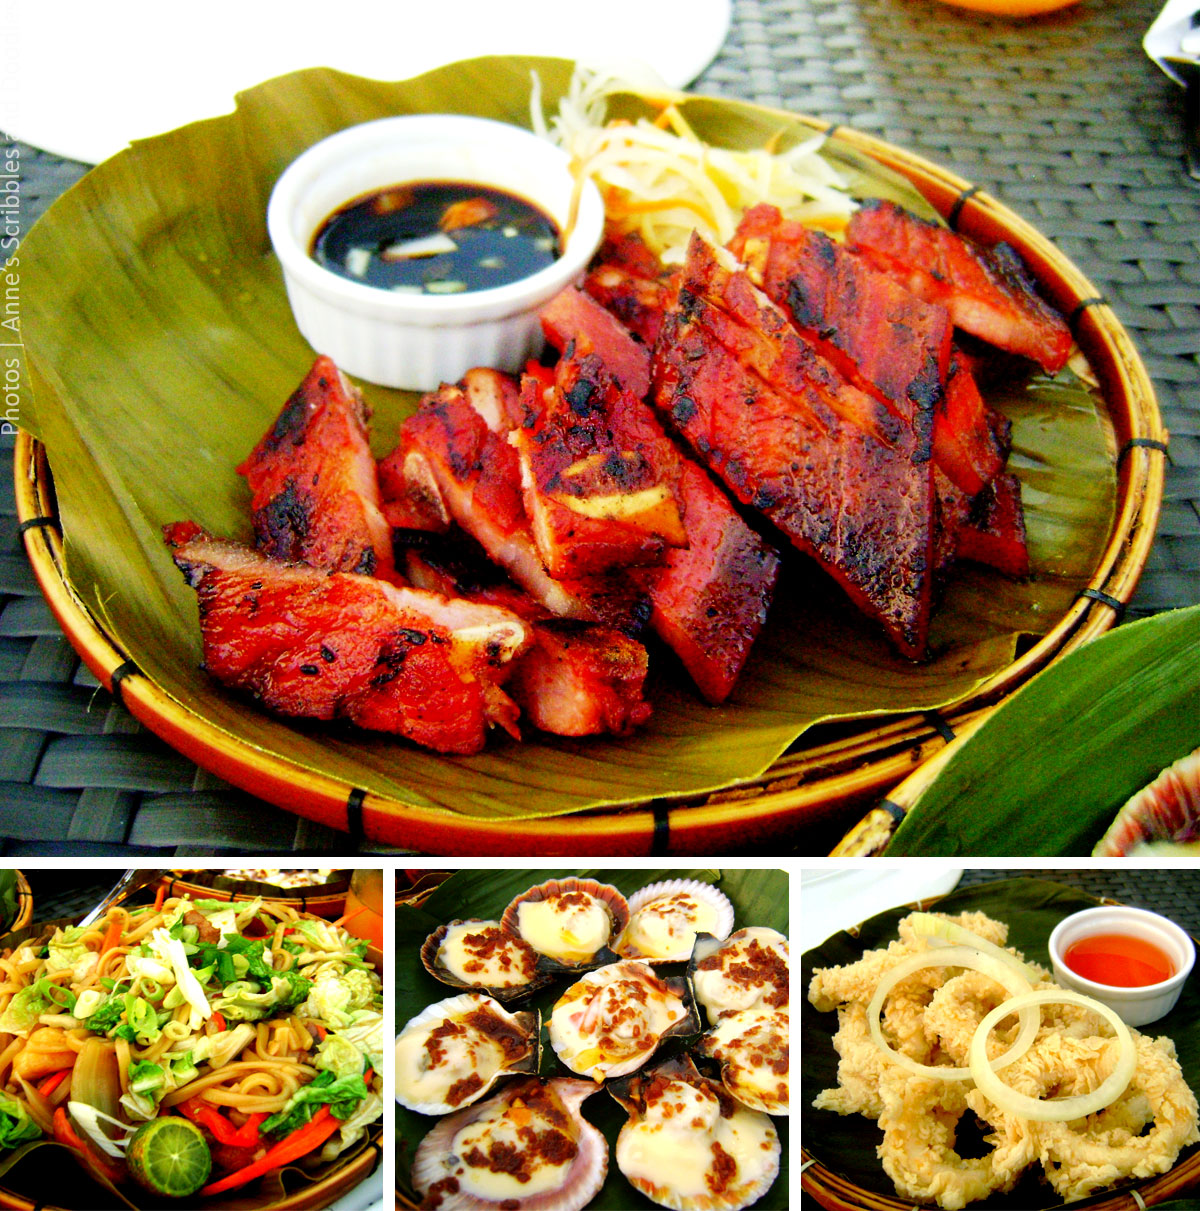 Lantaw Native Restaurant | 10 Dining Spots in Cebu that Make You #Foodgasm